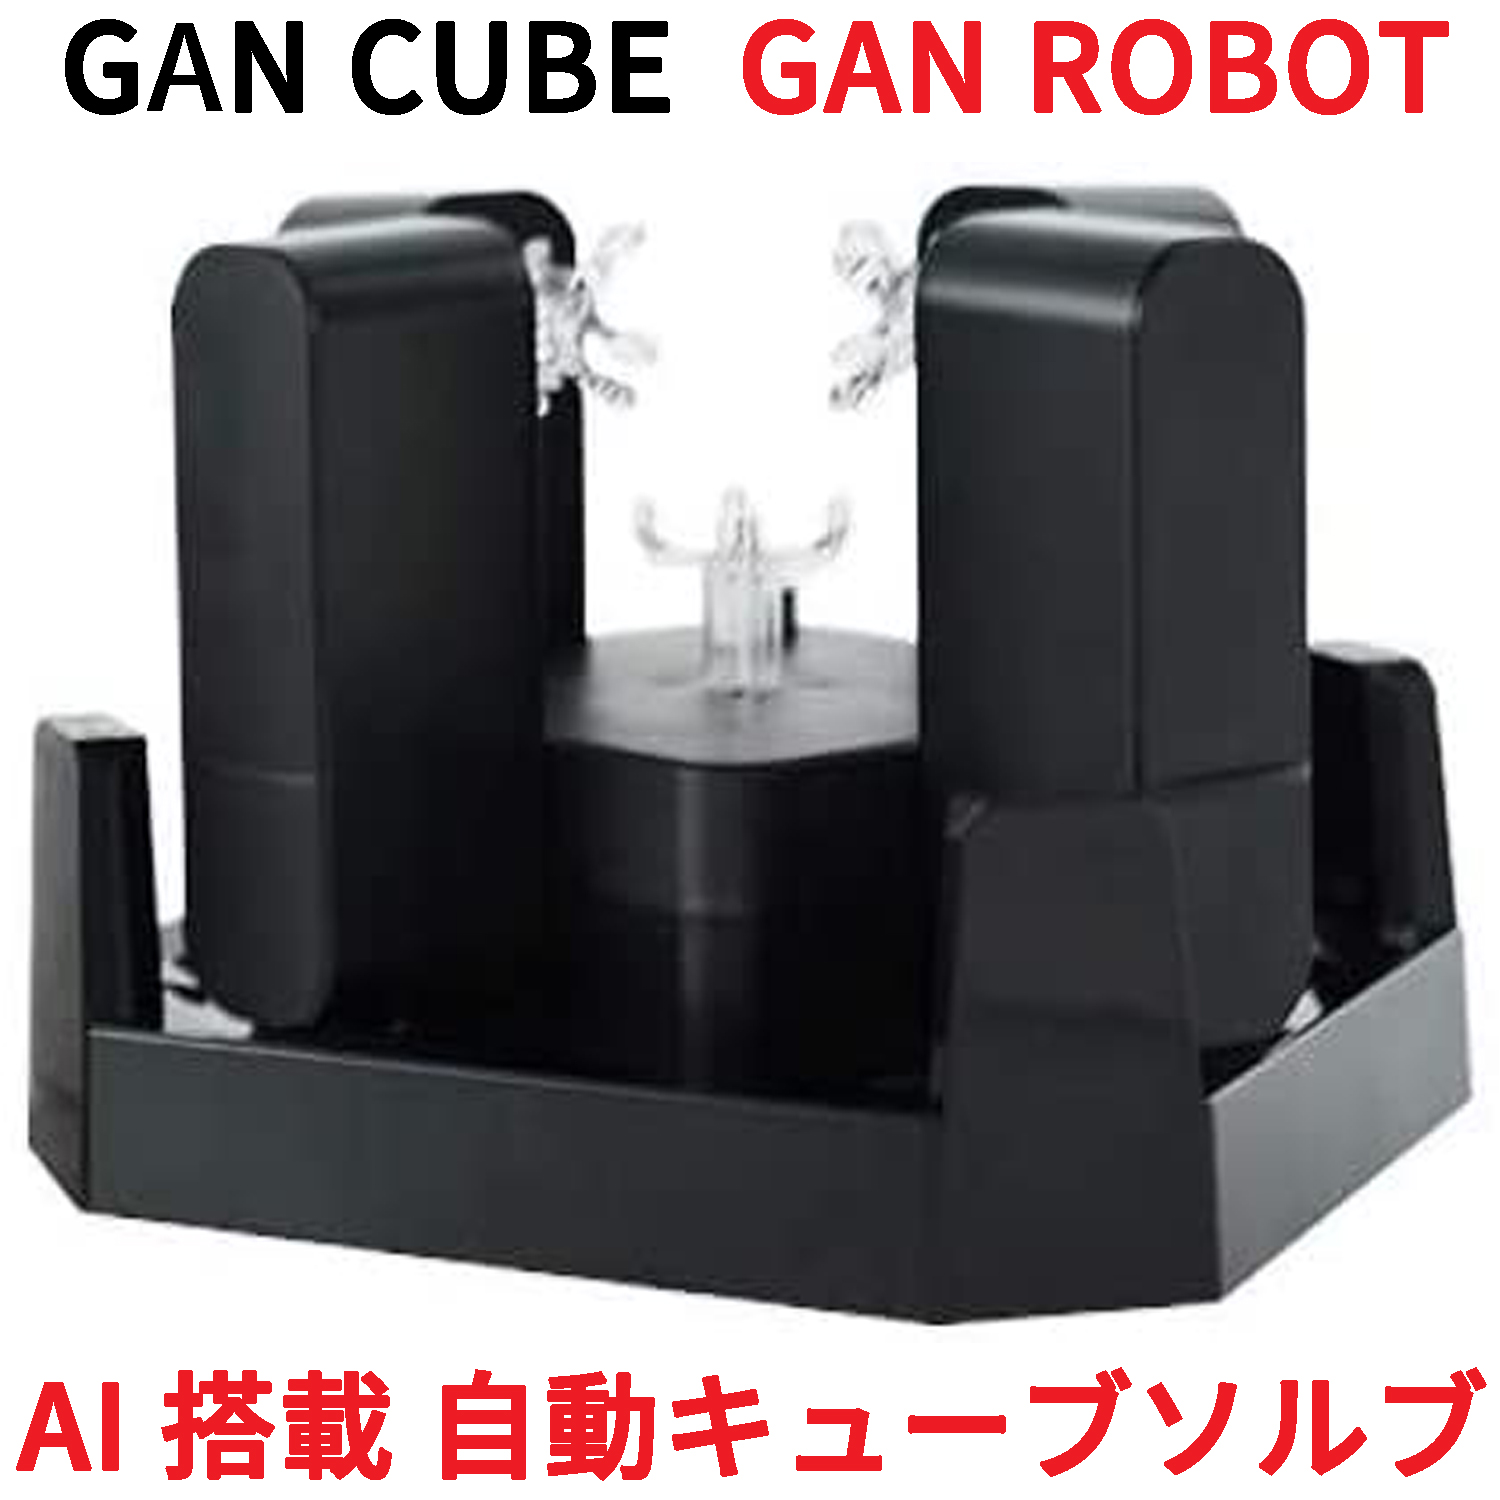 AI搭載 自動 スクランブル ソルブ ロボット GAN356 i 対応 Gancube GAN ROBOT 356 i対応 競技用 ルービックキューブ 【限定製作】 3x3 マグネット 磁石 スピードキューブ 情熱セール マジックキューブ ガンキューブ 3x3x3 内蔵 キューブ GAN356i 圧縮 白 立体パズル GANROBOT 公式 スマートキューブ